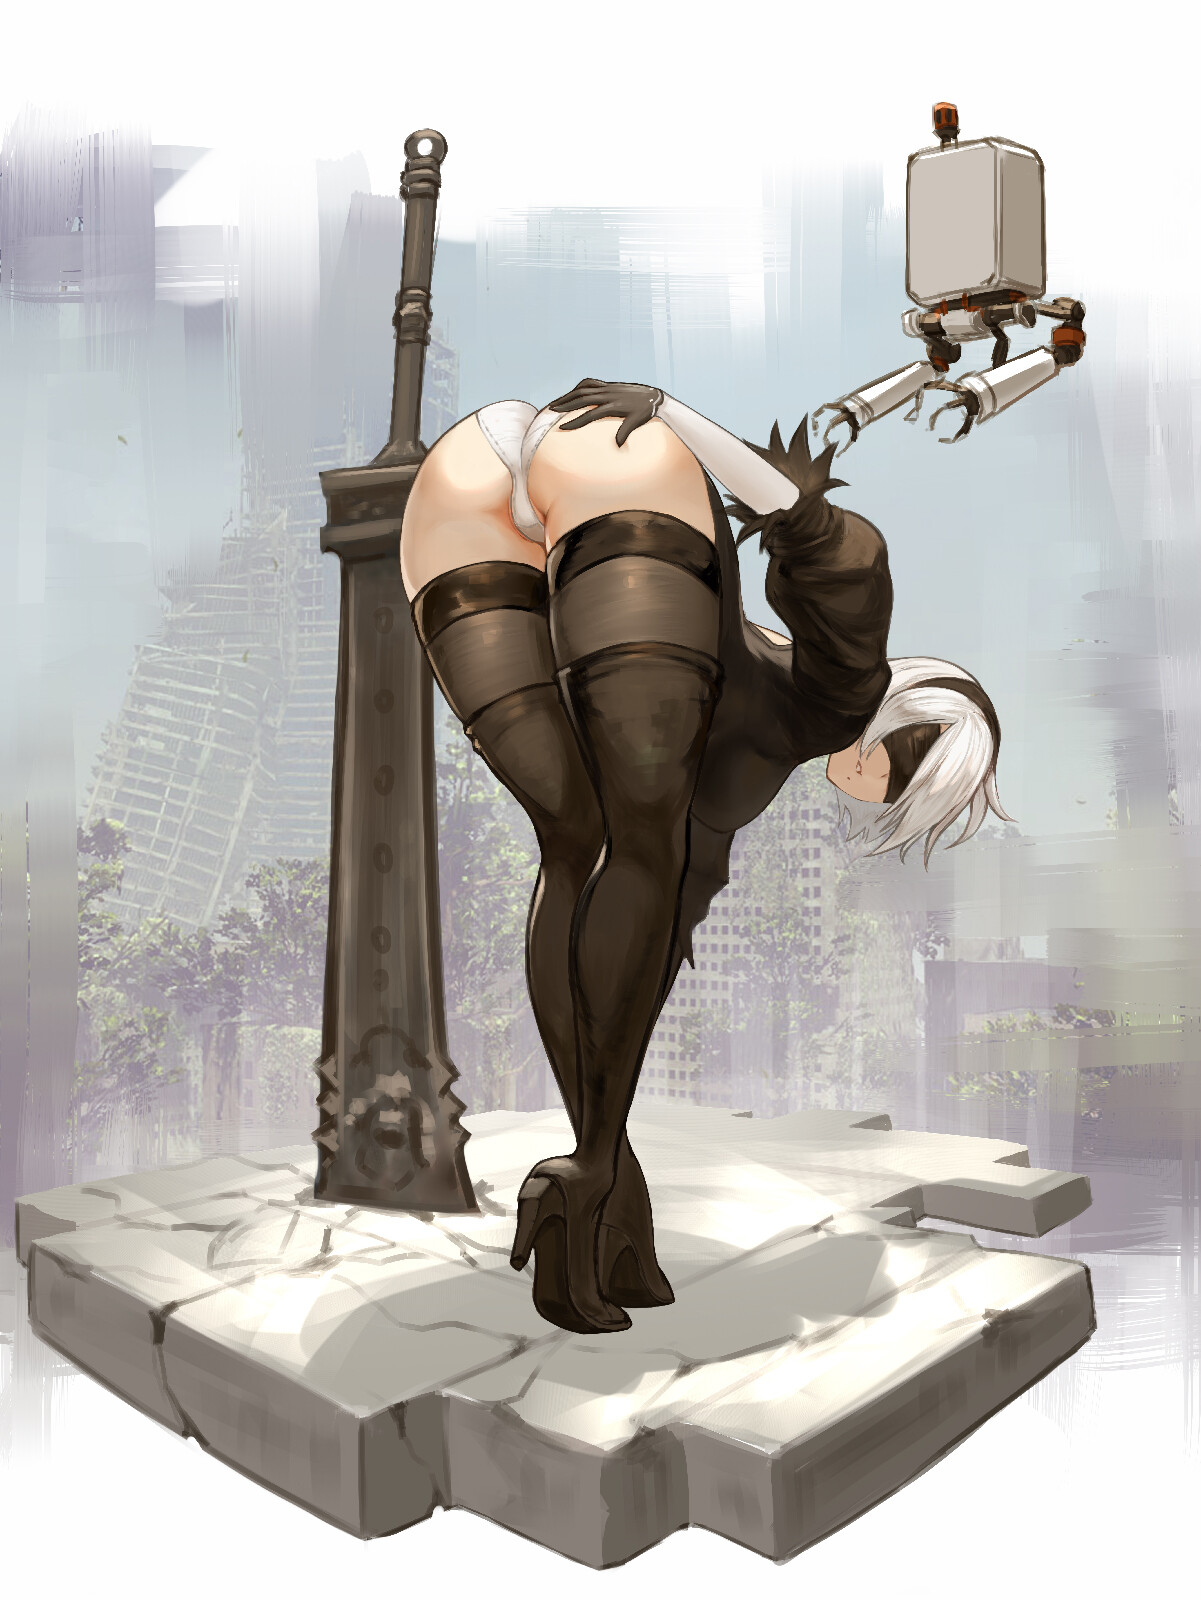 Anime 1201x1600 Azto Dio Nier: Automata 2B (Nier: Automata) anime girls bent over panties ass artwork video game girls stockings thigh high boots